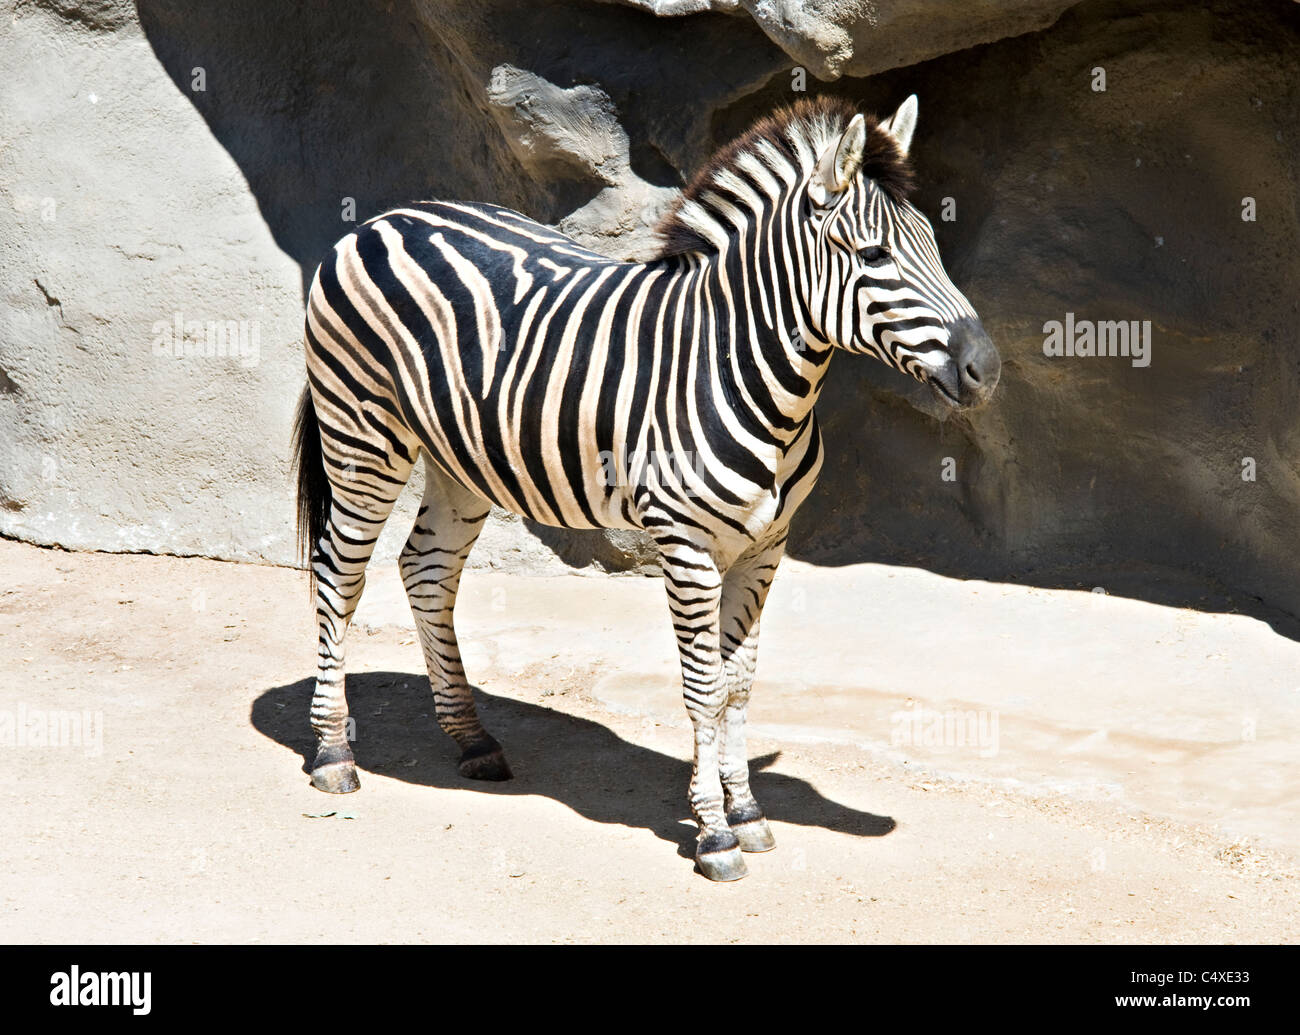 A Black and White Striped Zebra at Taronga Zoo in Sydney New South Wales Australia Stock Photo